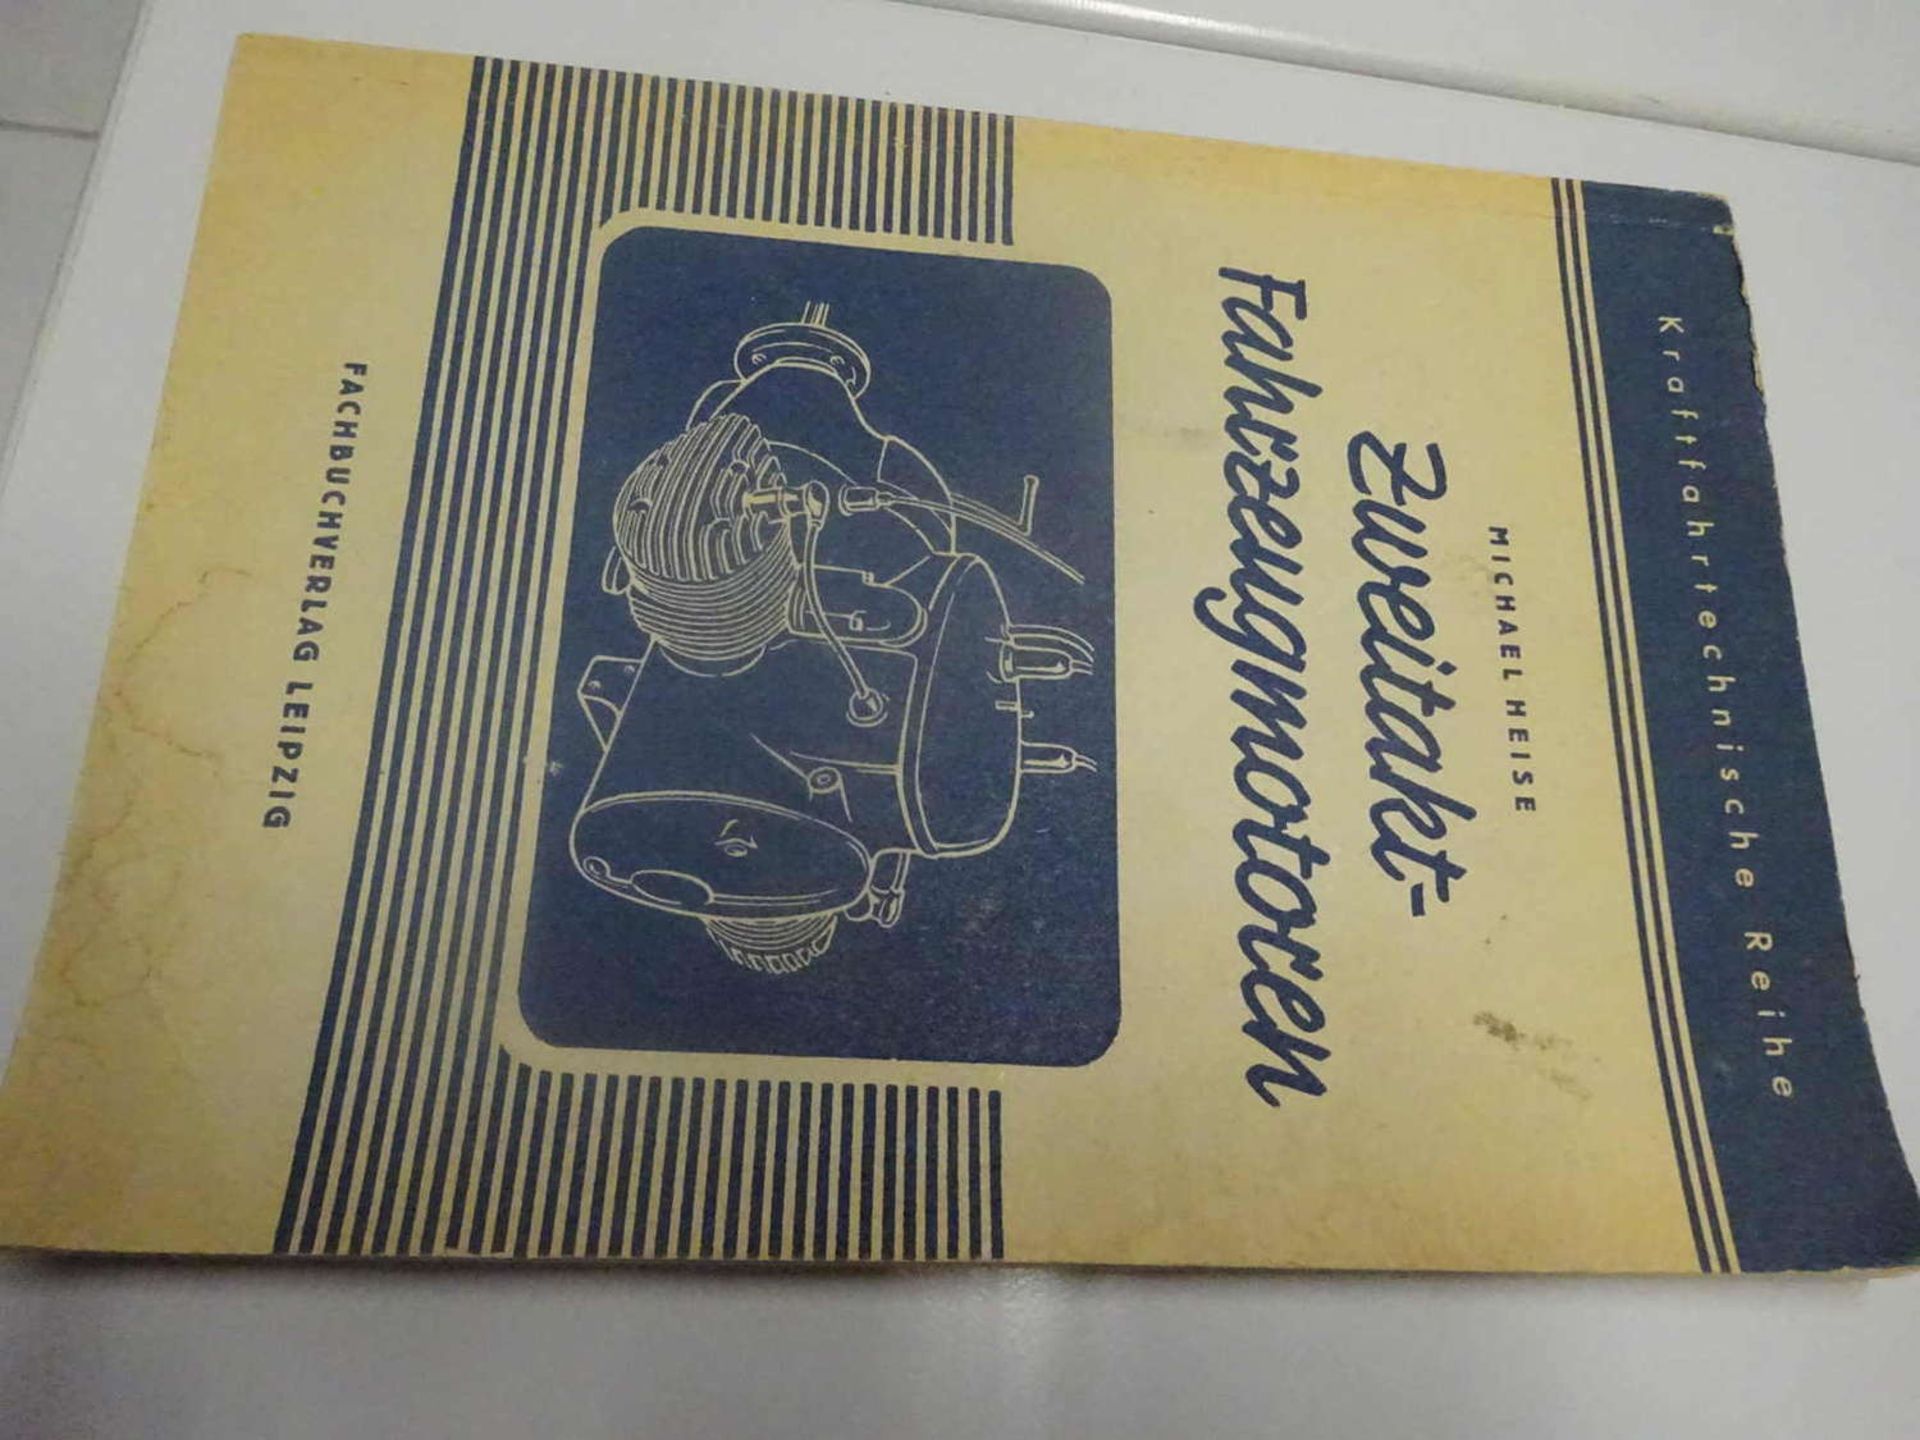 Michael Heise "Zweitakt Fahrzeugmotoren", Fachbuchverlag Leipzig, 1955Michael Heise "two-stroke